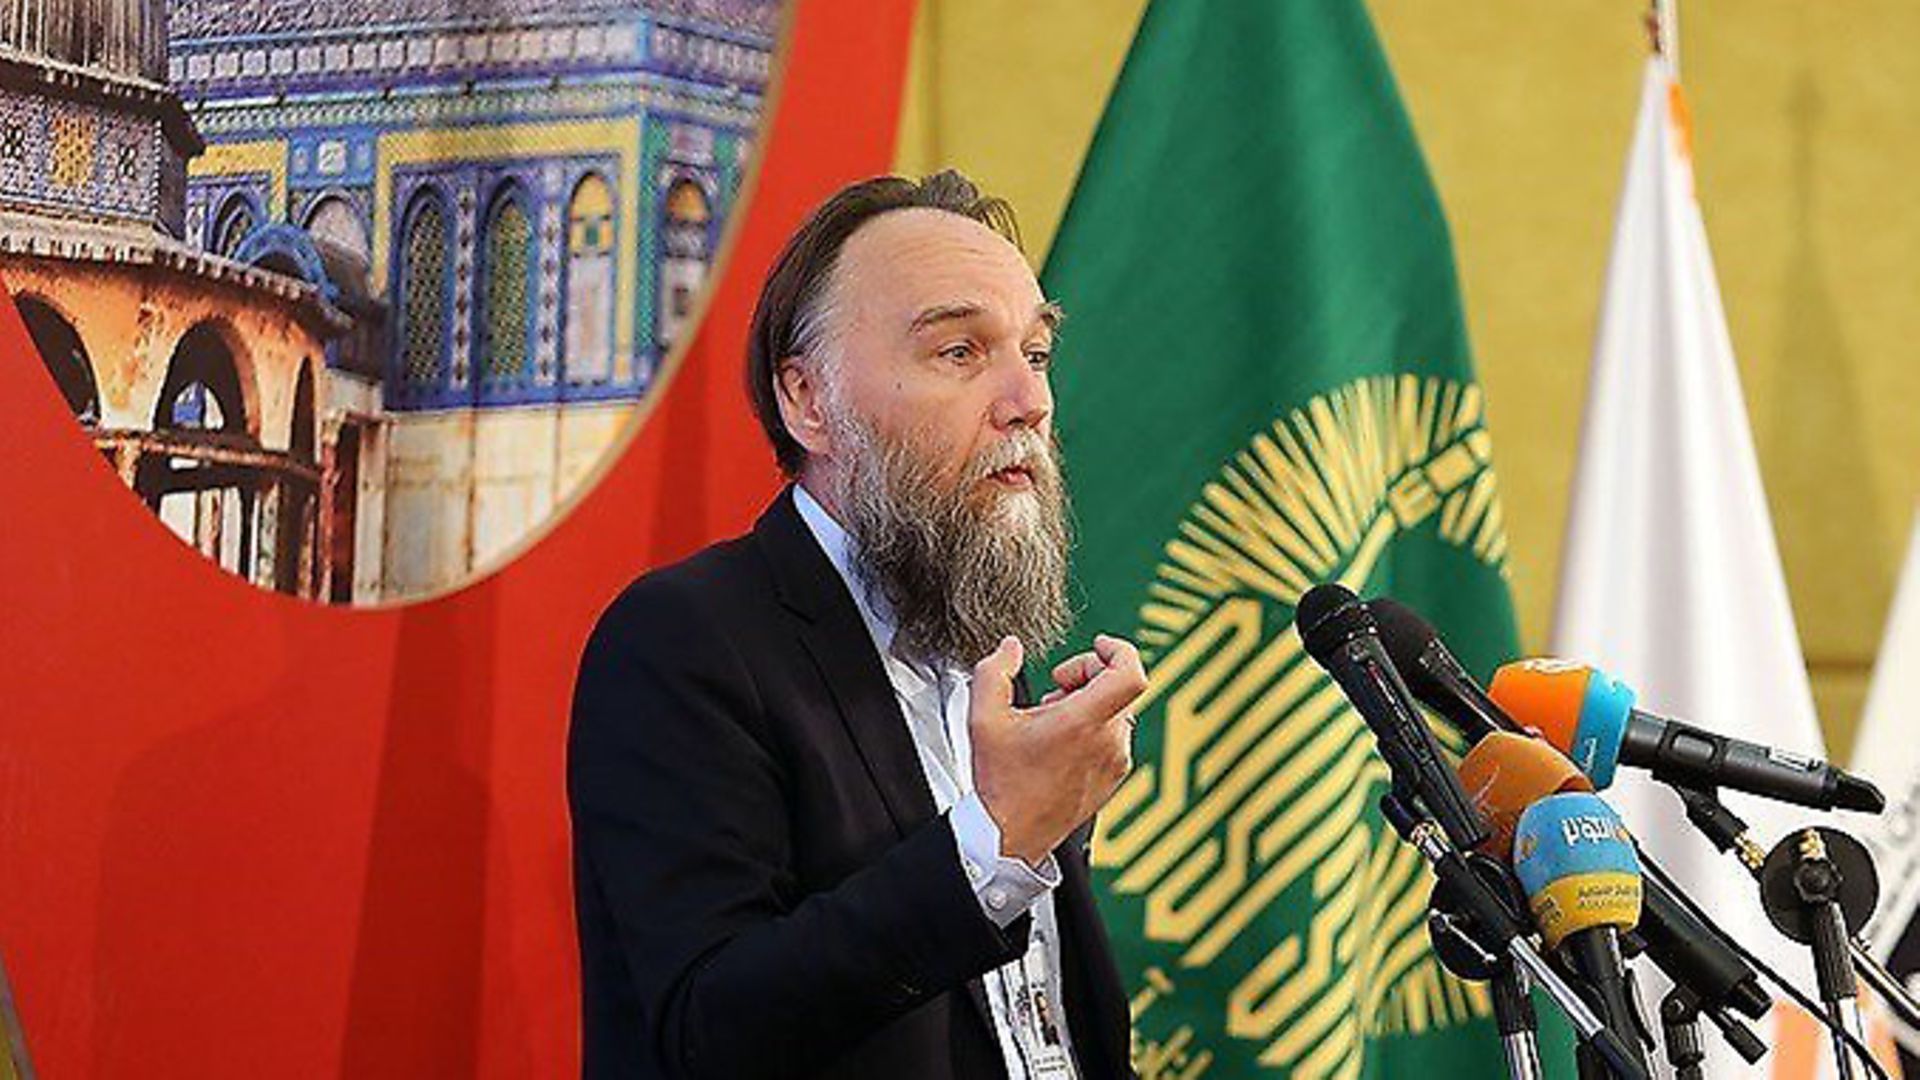 Anti-Western philosopher Aleksandr Dugin who is said to hold sway over Vladimir Putin. Photo: Tasnim News Agency - Credit: Archant